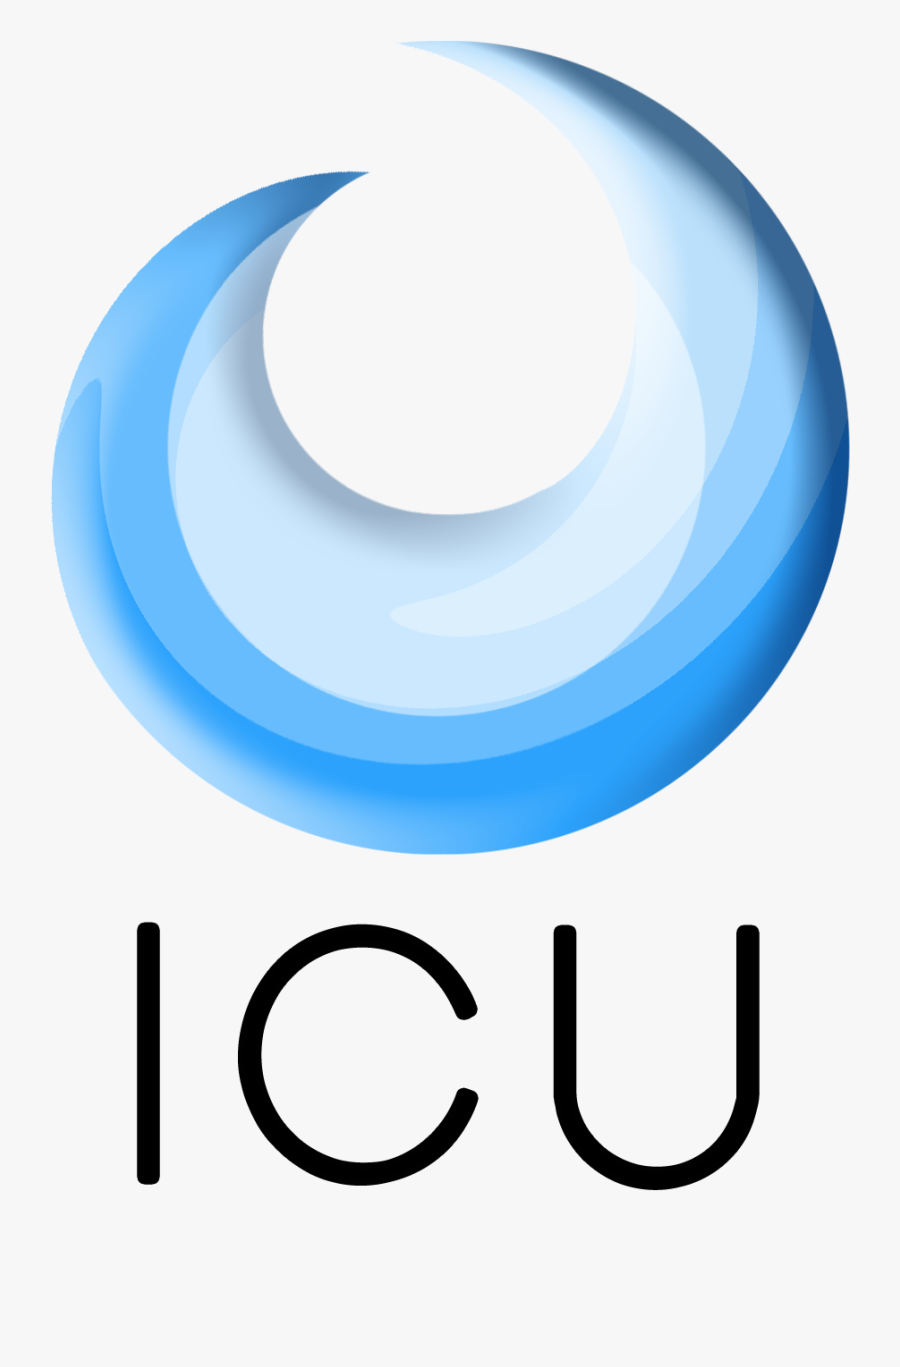 Icu Logos Clipart , Png Download - Icu Logo, Transparent Clipart